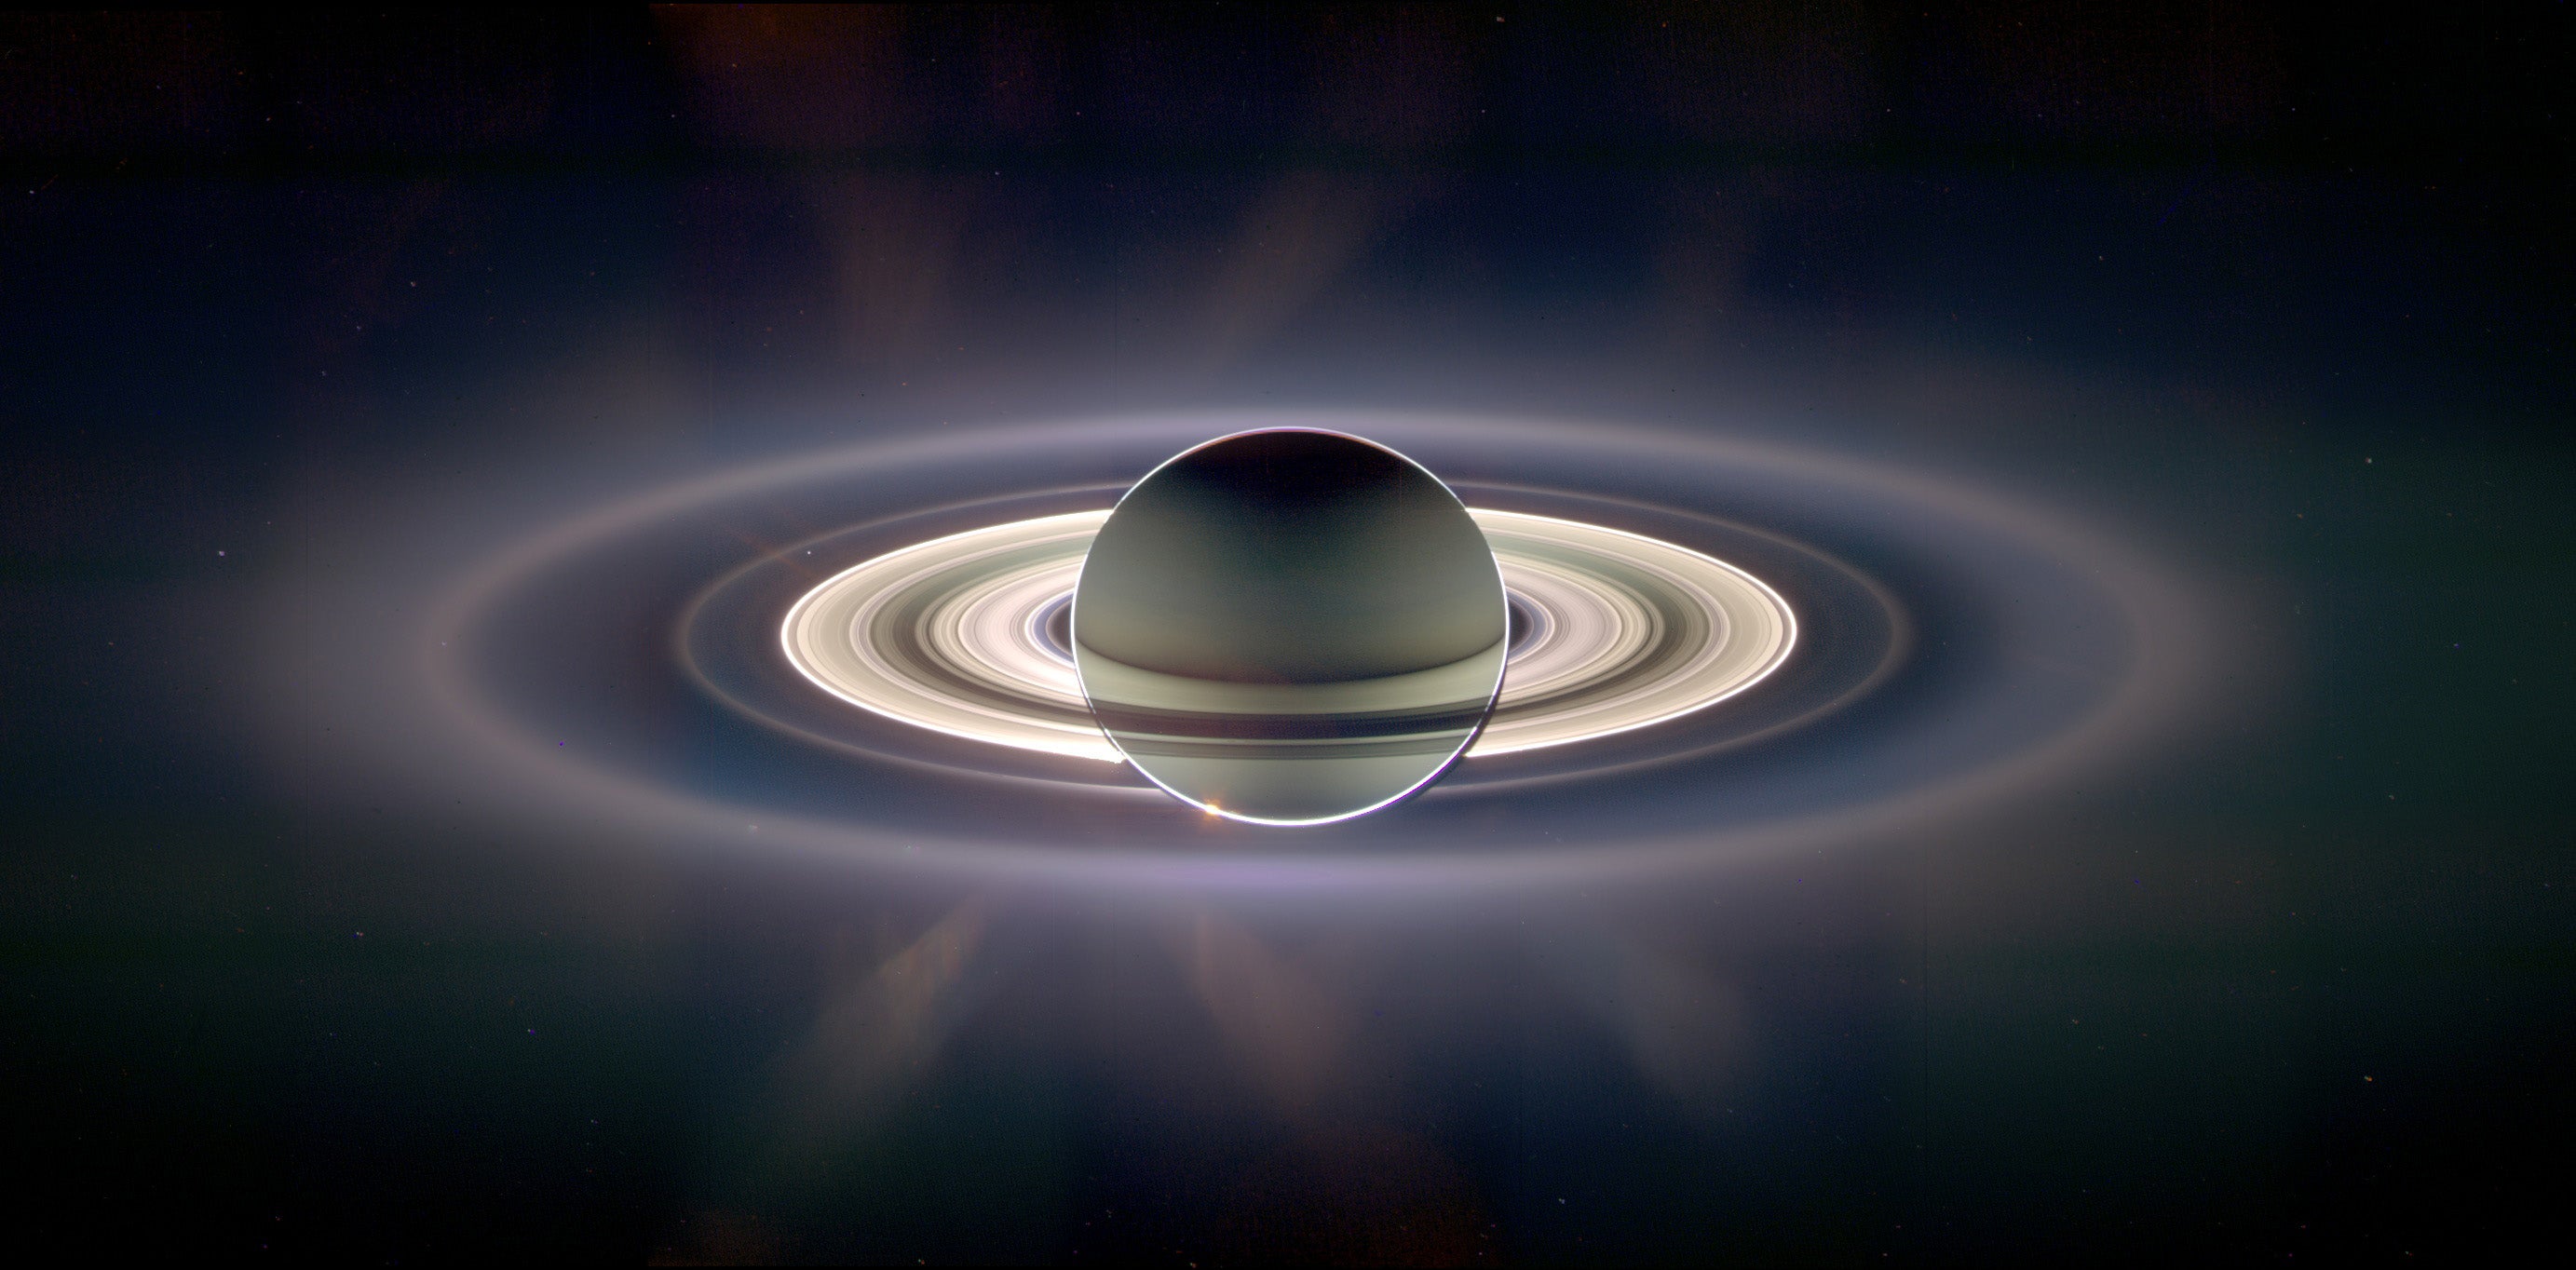 Image: Cassini Imaging Team, SSI, JPL, ESA, NASA